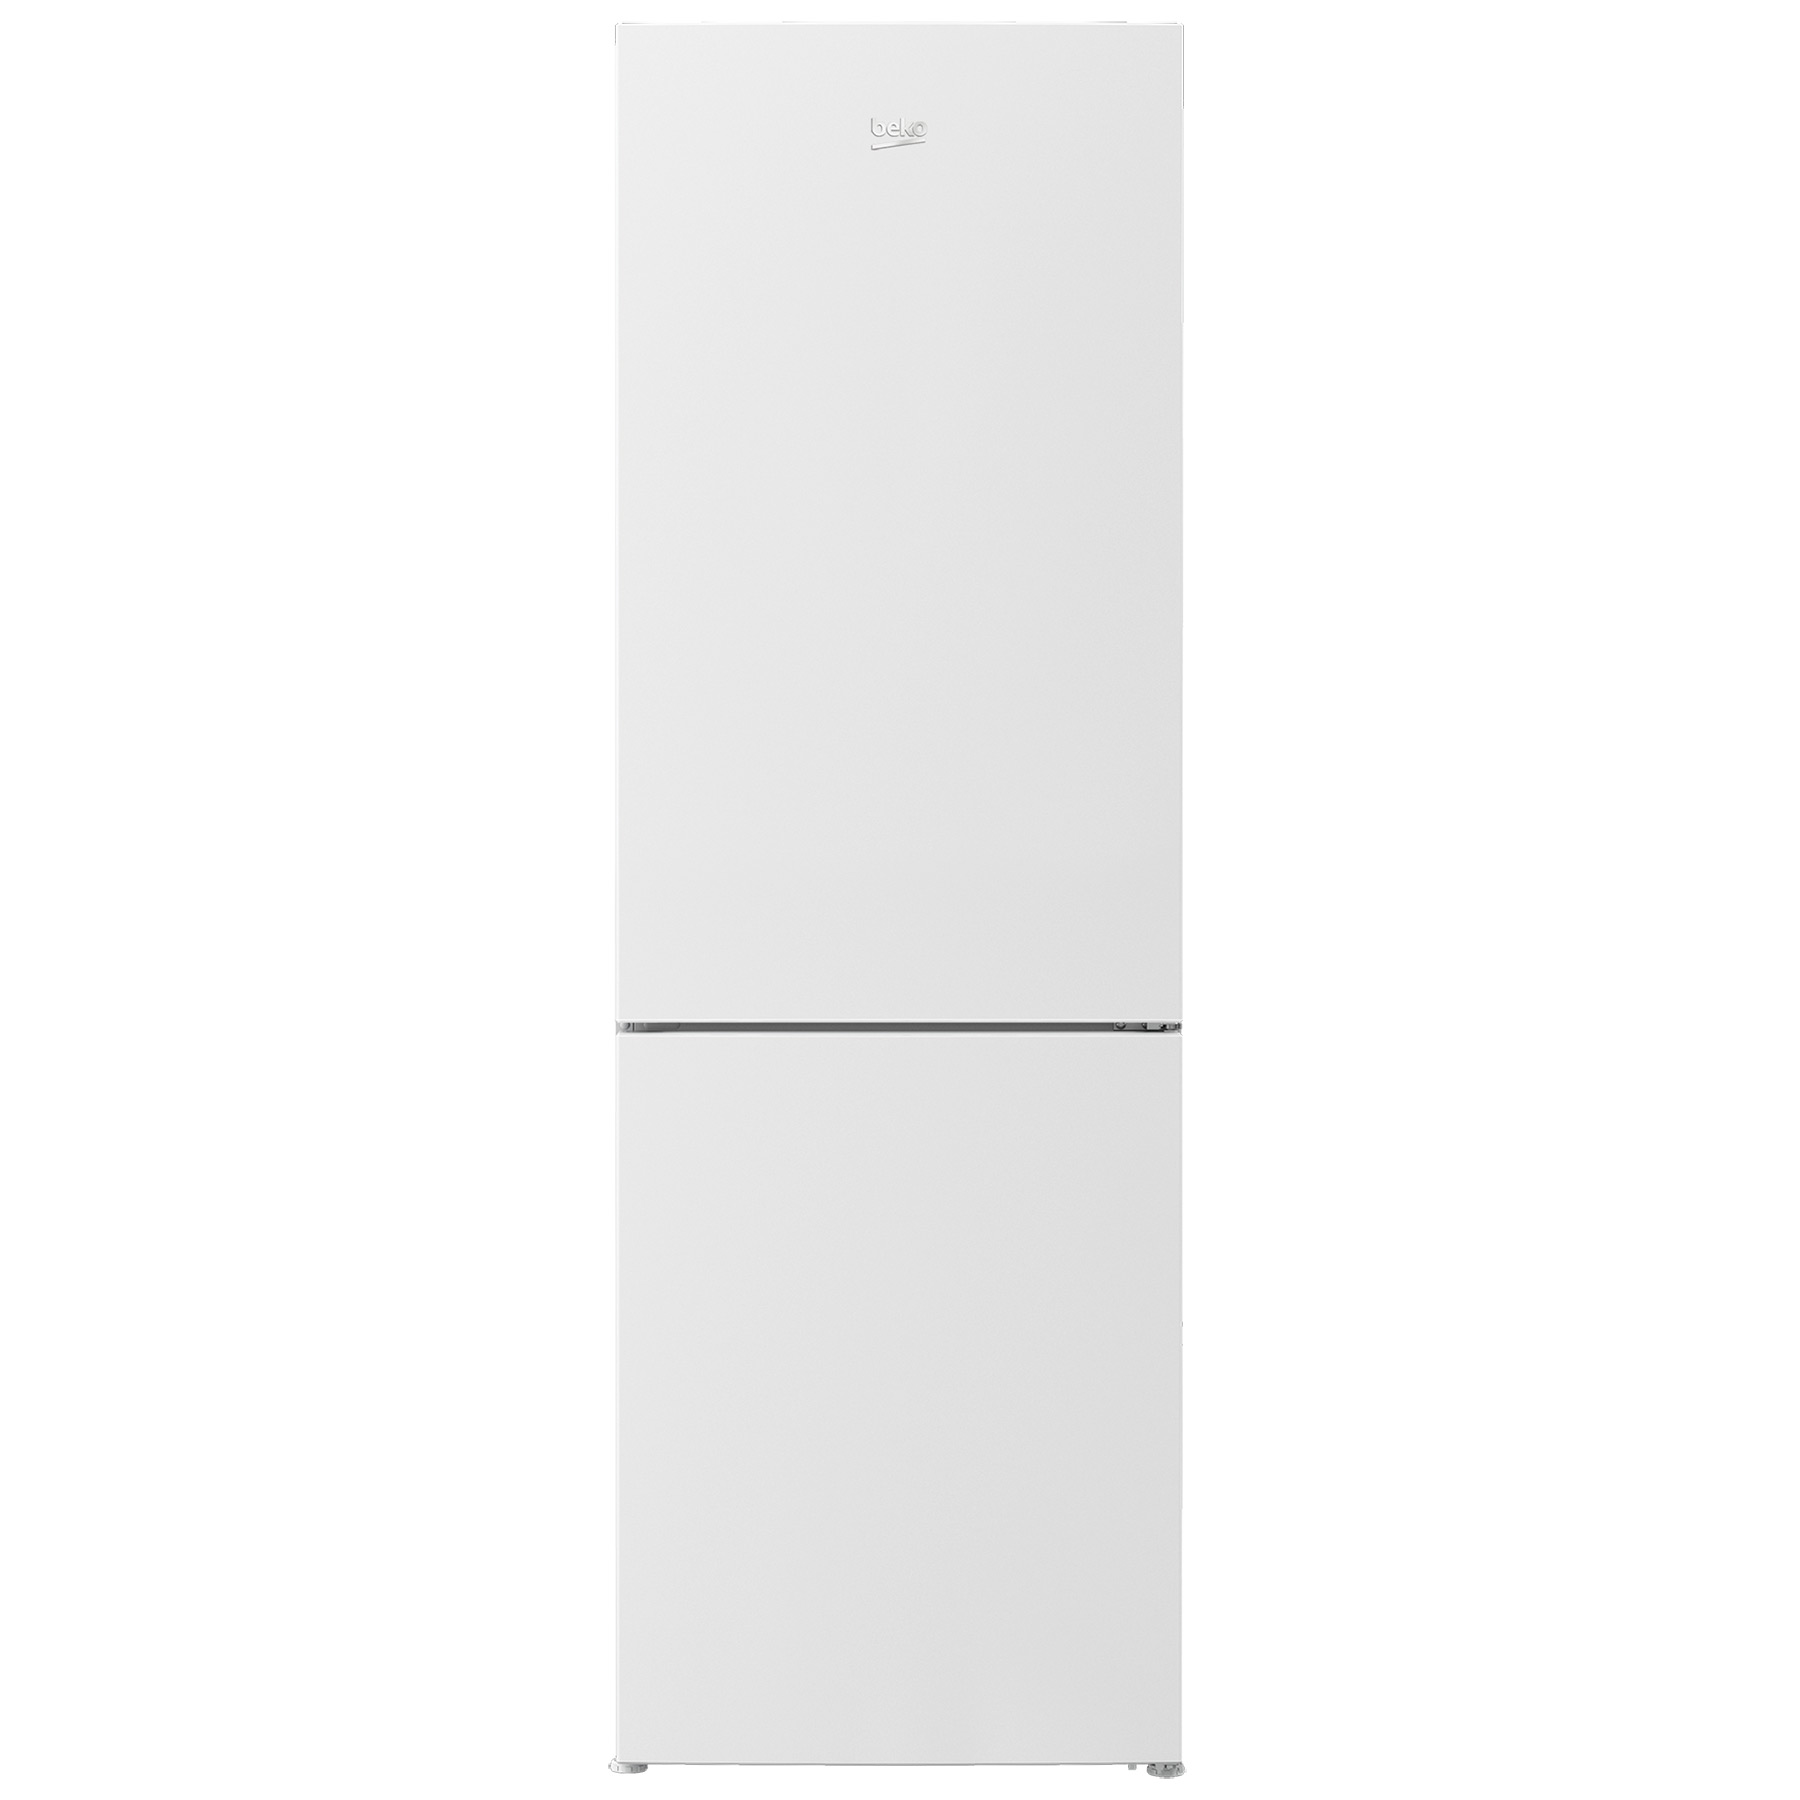 Beko CCFH1685W 60cm Frost Free Fridge Freezer in White 1 85m F Rated